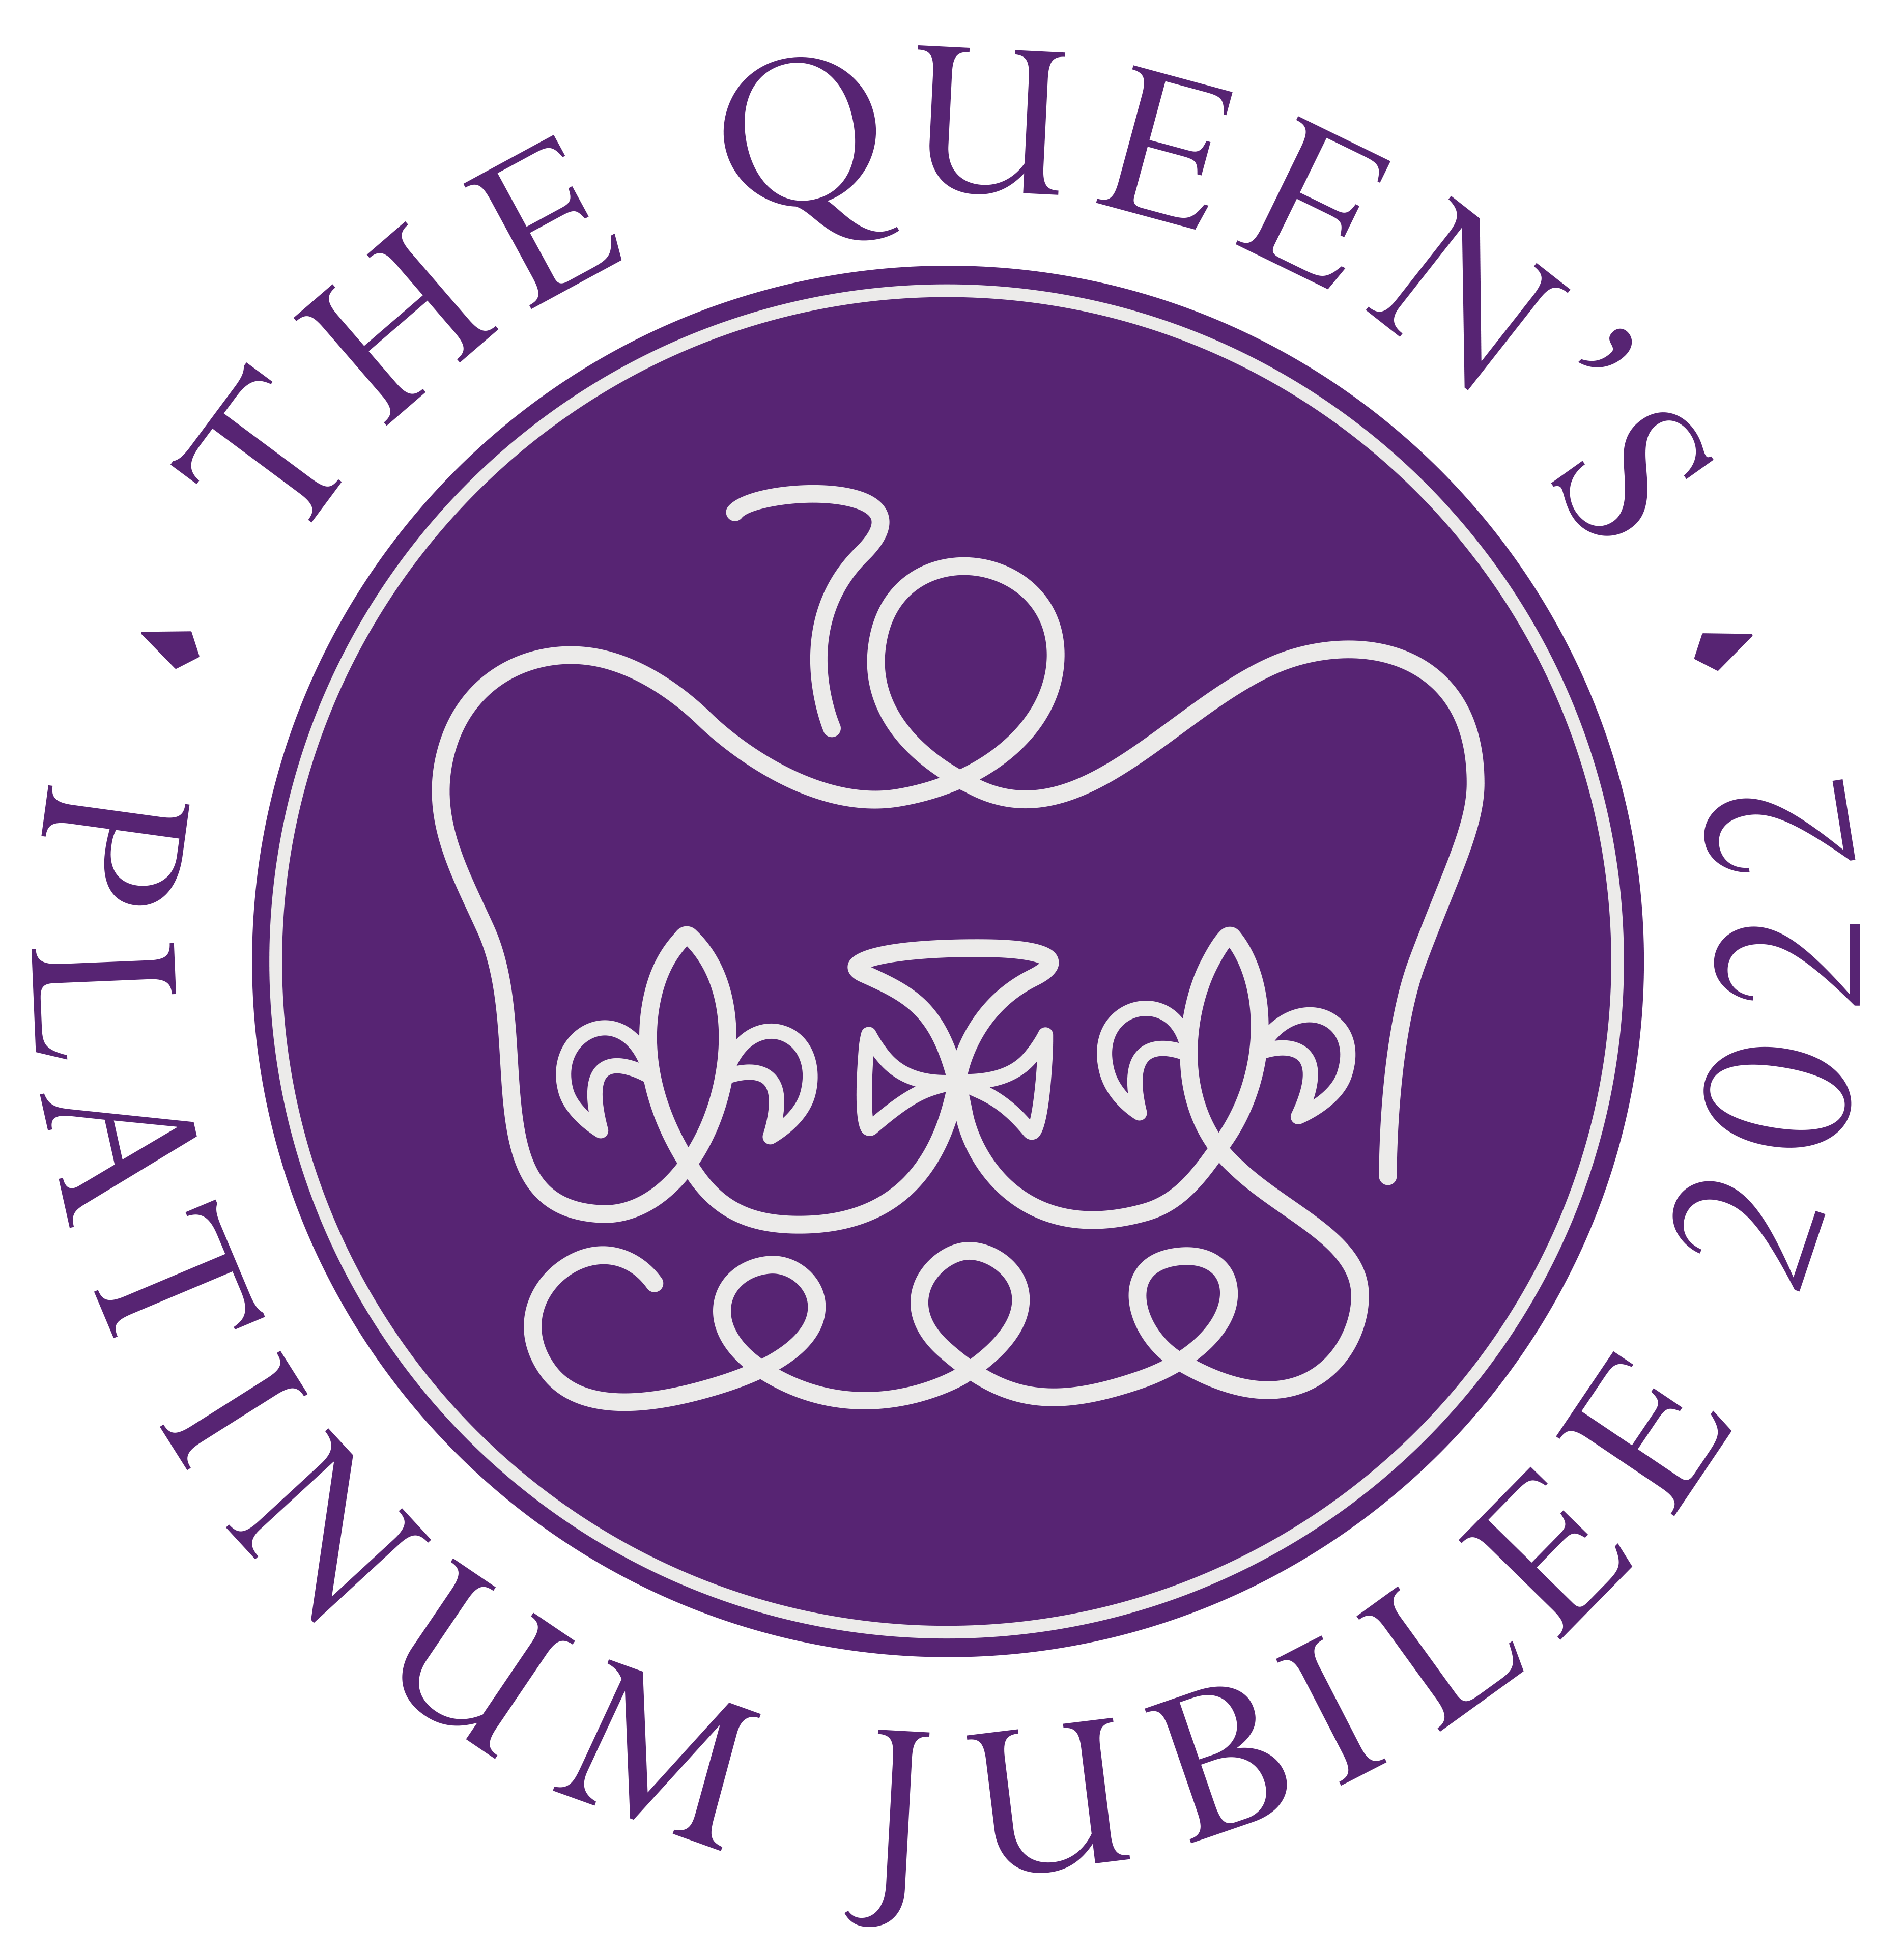 The Queens Platinum Jubilee logo